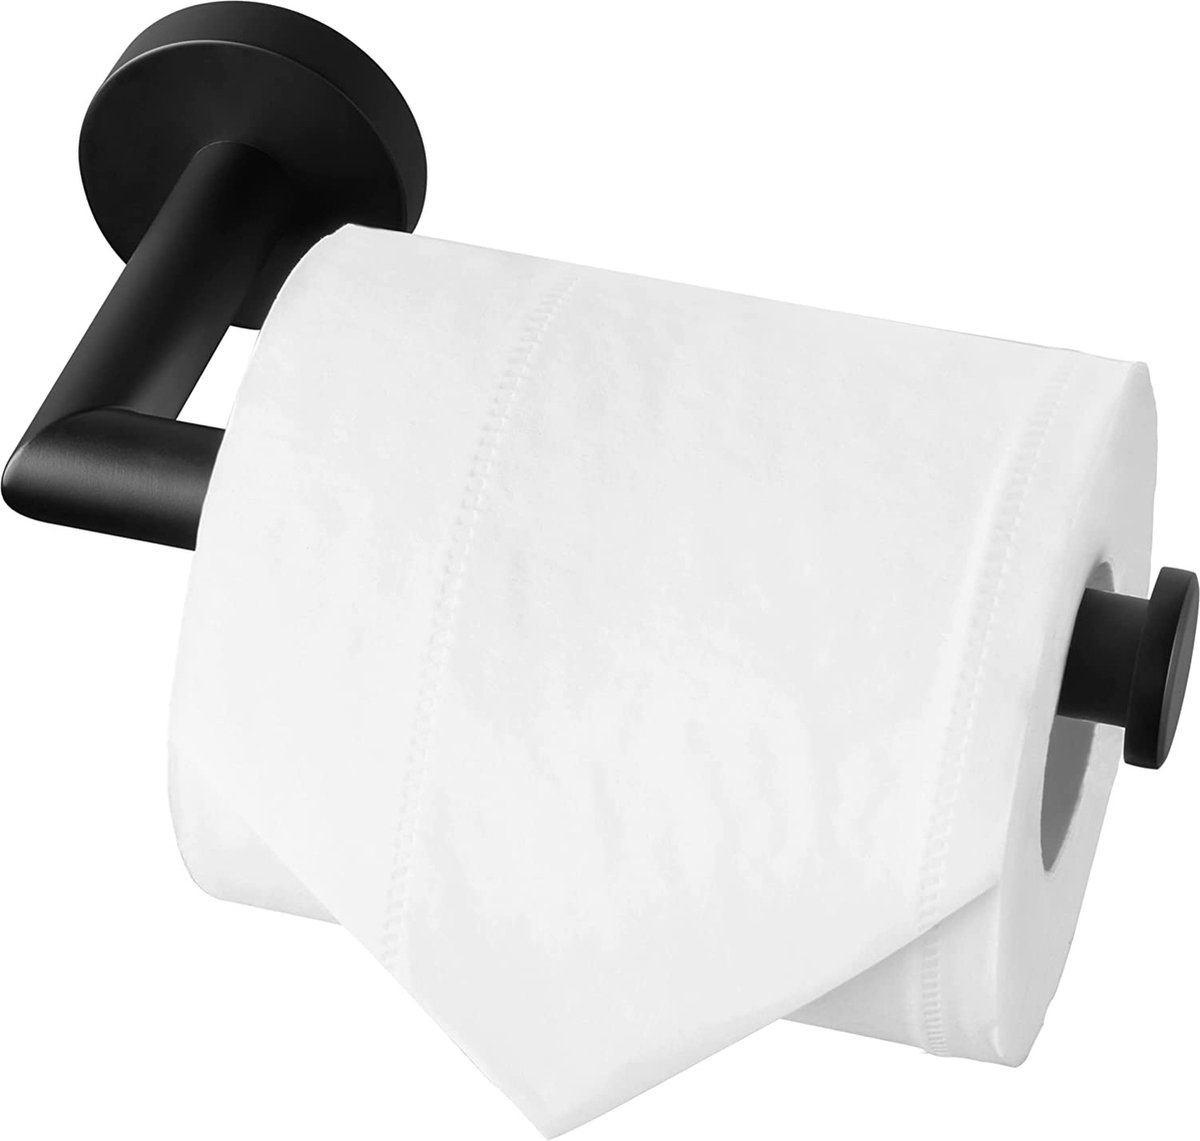 HITSLAM toiletrolhouder, WC roestvrij staal wc-rolhouder voor keuken en badkamer, toilet toiletpapier (mat zwart) (cilinder)